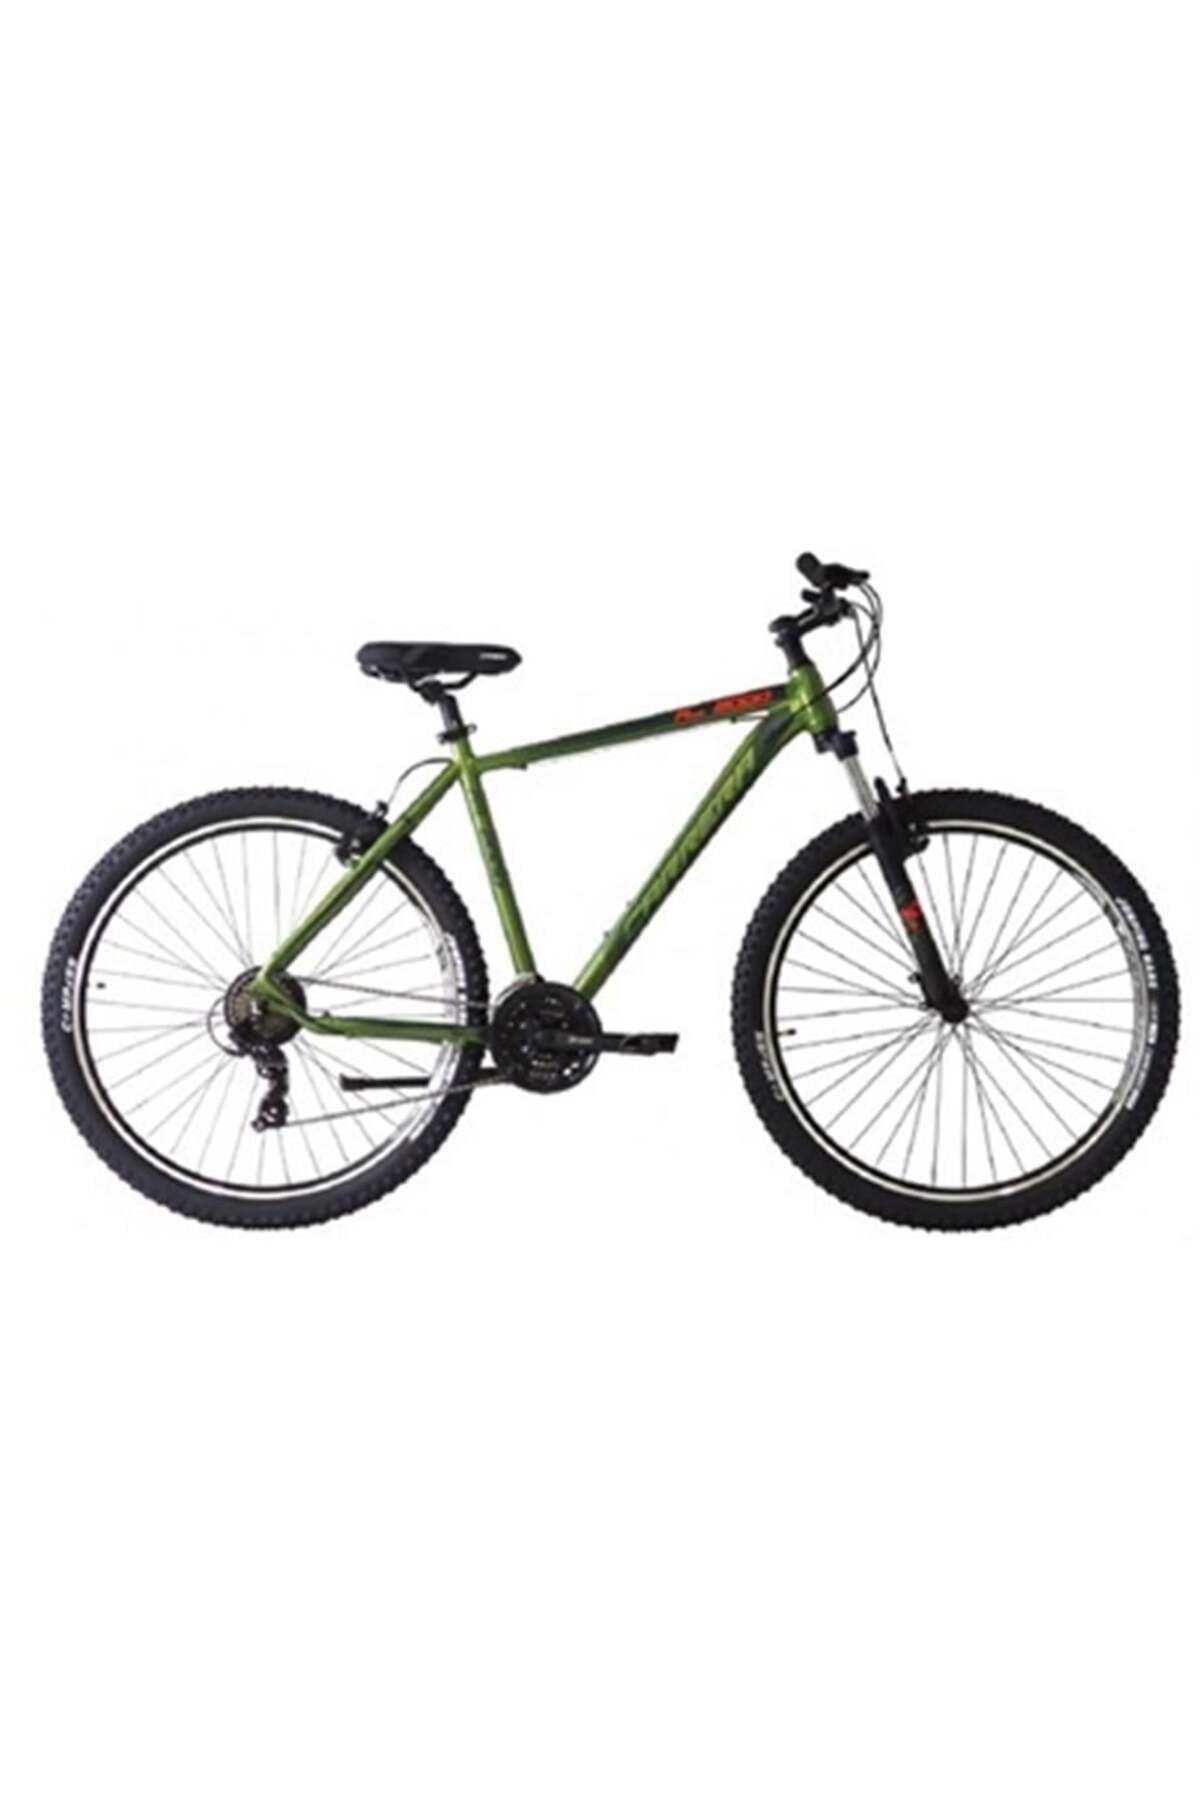 Carrera 2965 M09-2000-m Erkek Dağ Bisikleti 535h V 29 Jant 21 Vites Green Green Red